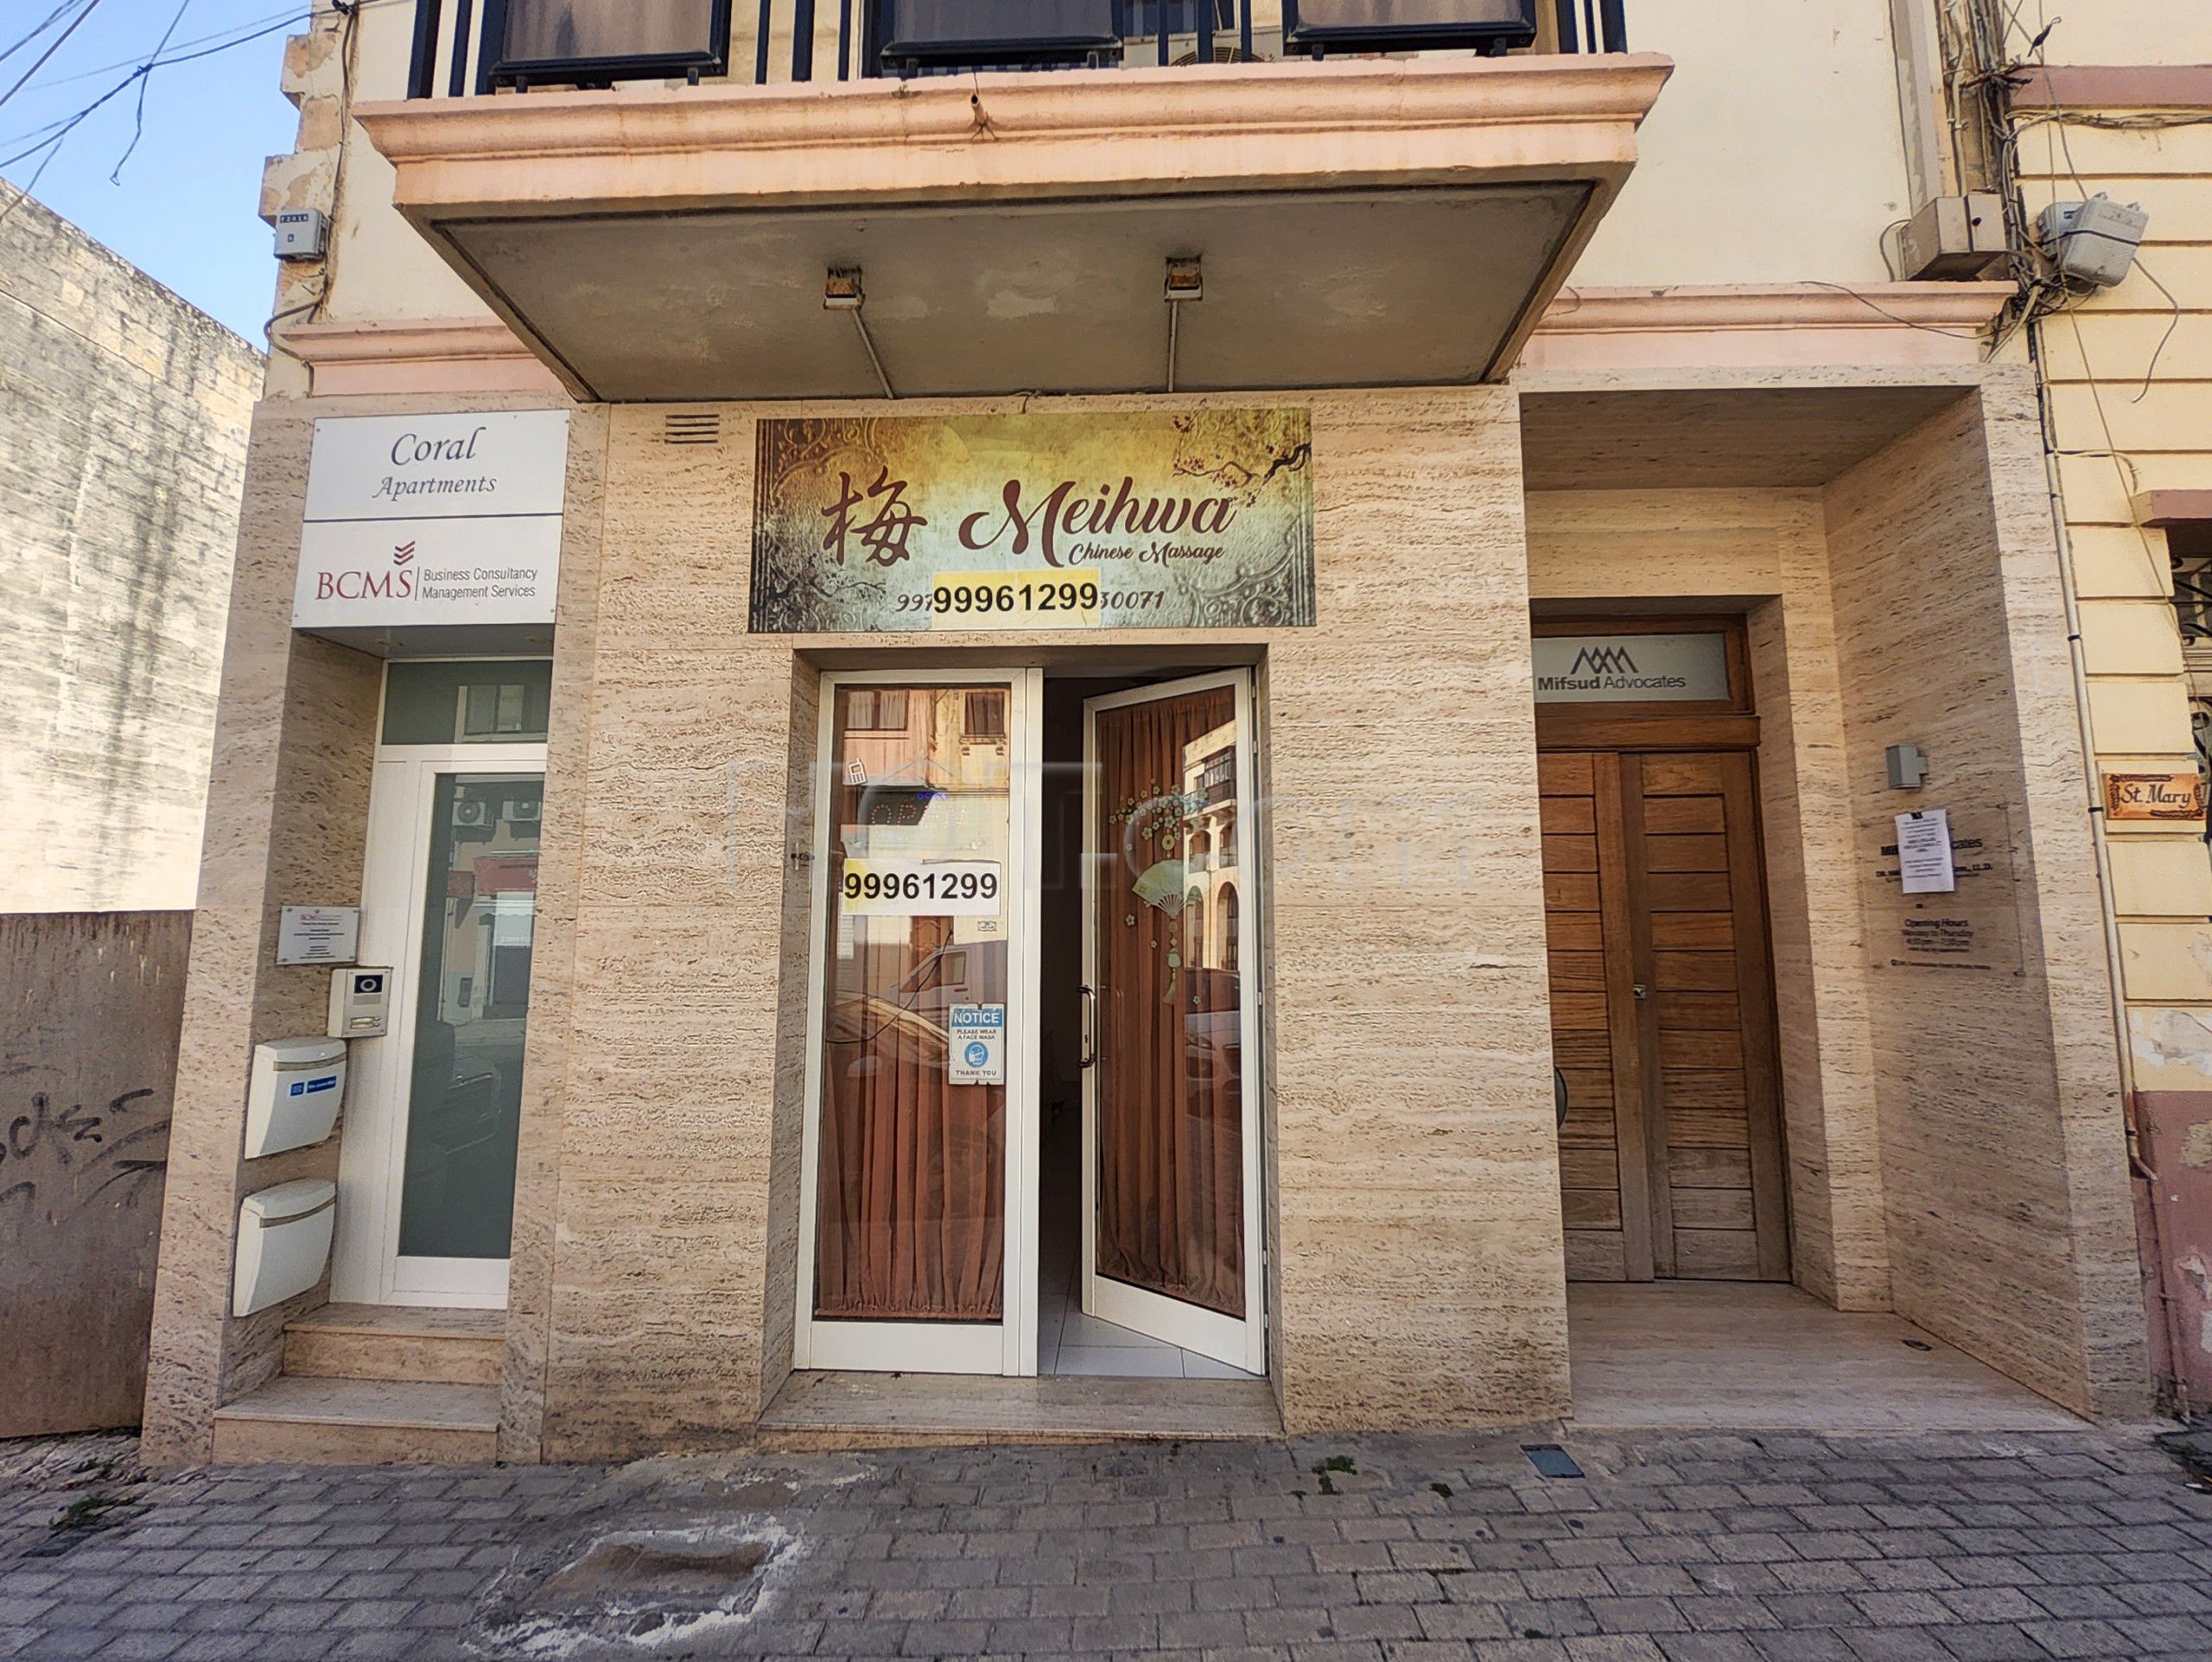 Mosta, Malta Meihwa Massage